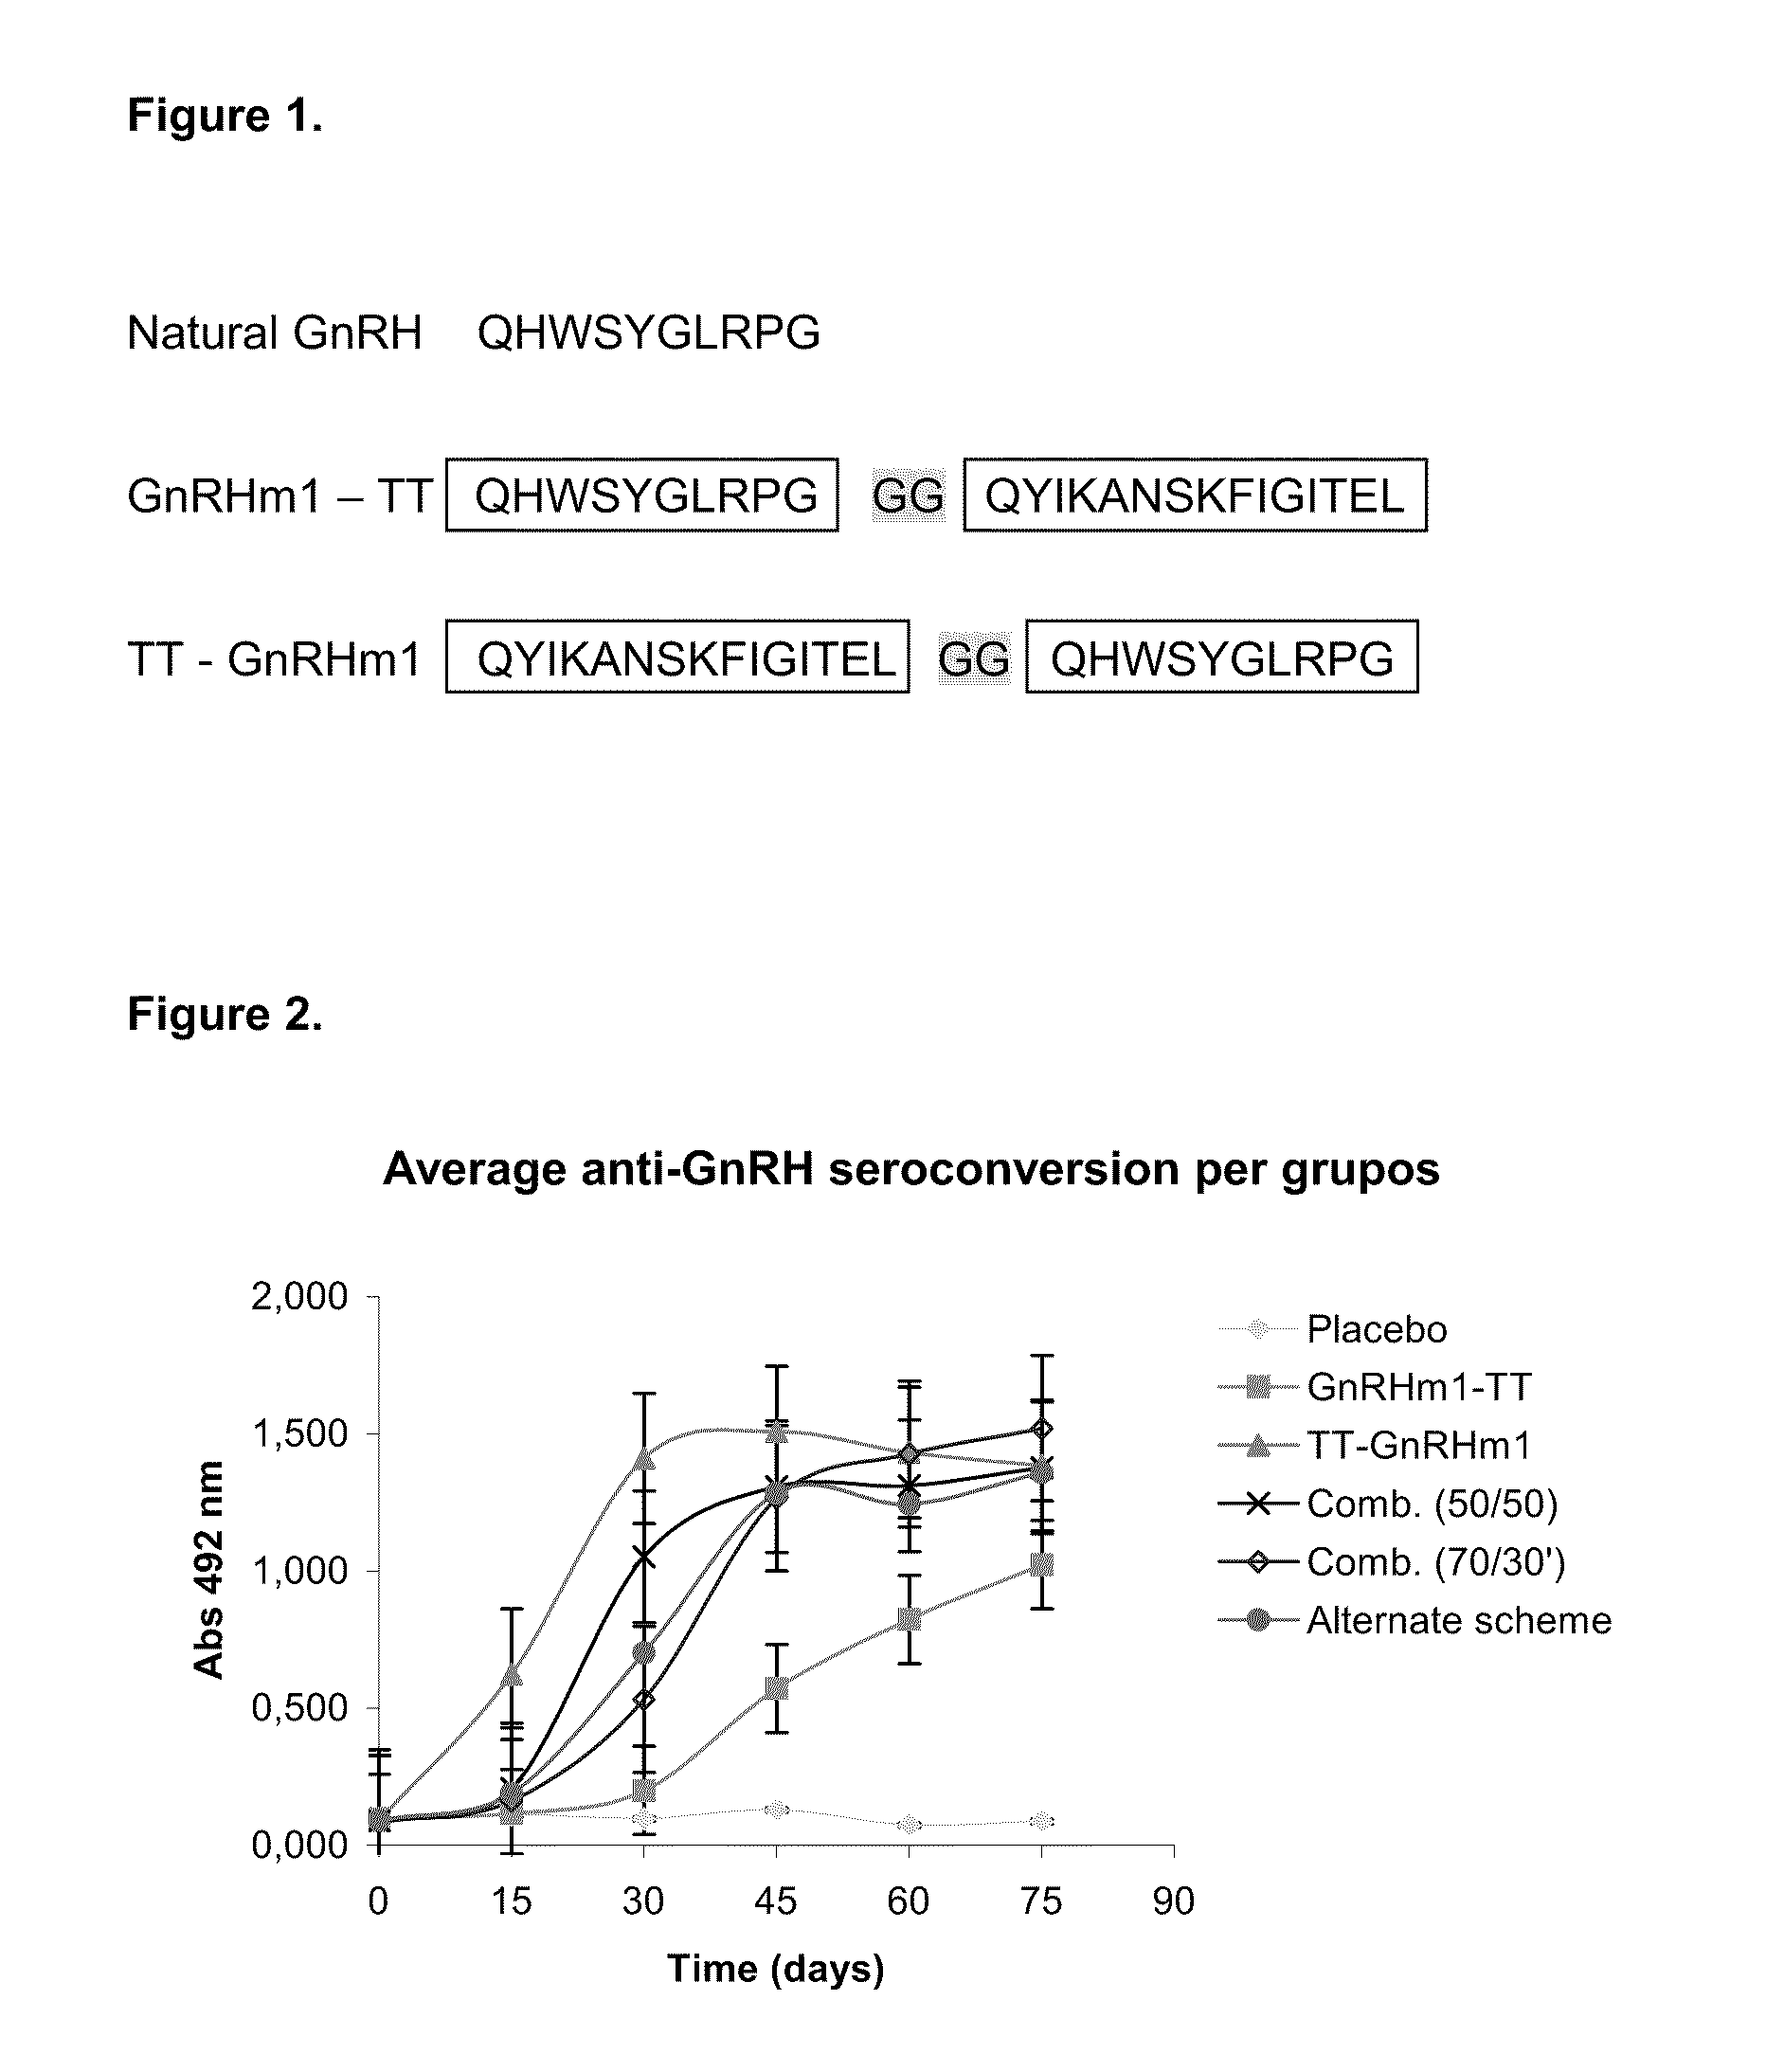 Pharmaceutical composition using gonadotropin - releasing hormone (GNRH) combined variants as immunogen